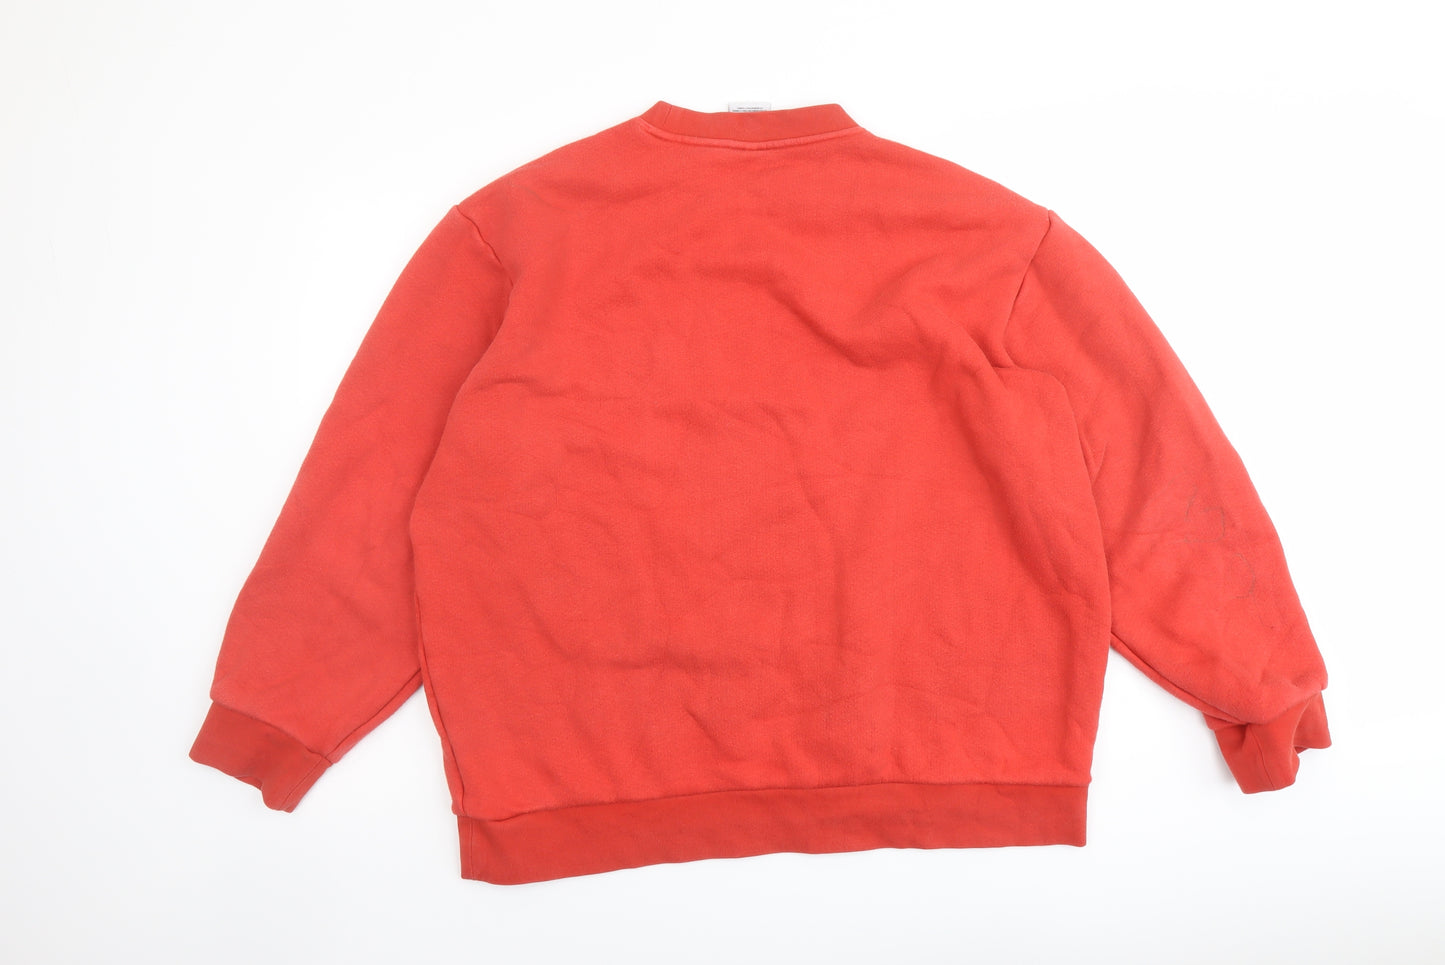 adidas Mens Red Cotton Pullover Sweatshirt Size L - Adidas Adventure Bear